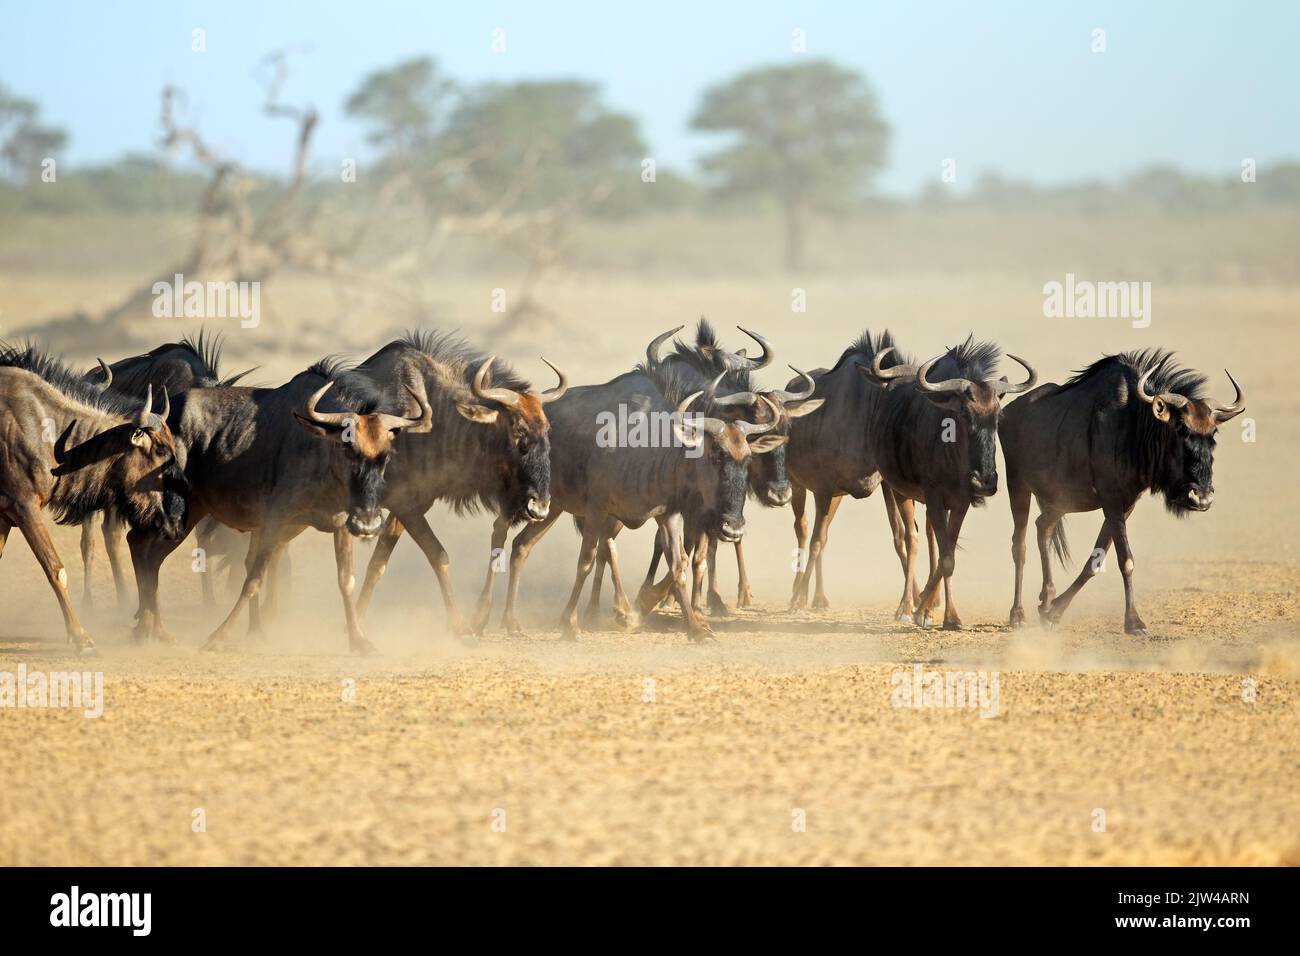 Blue wildebeest (Connochaetes taurinus) herd in dusty arid environment, Kalahari desert, South Africa Stock Photo